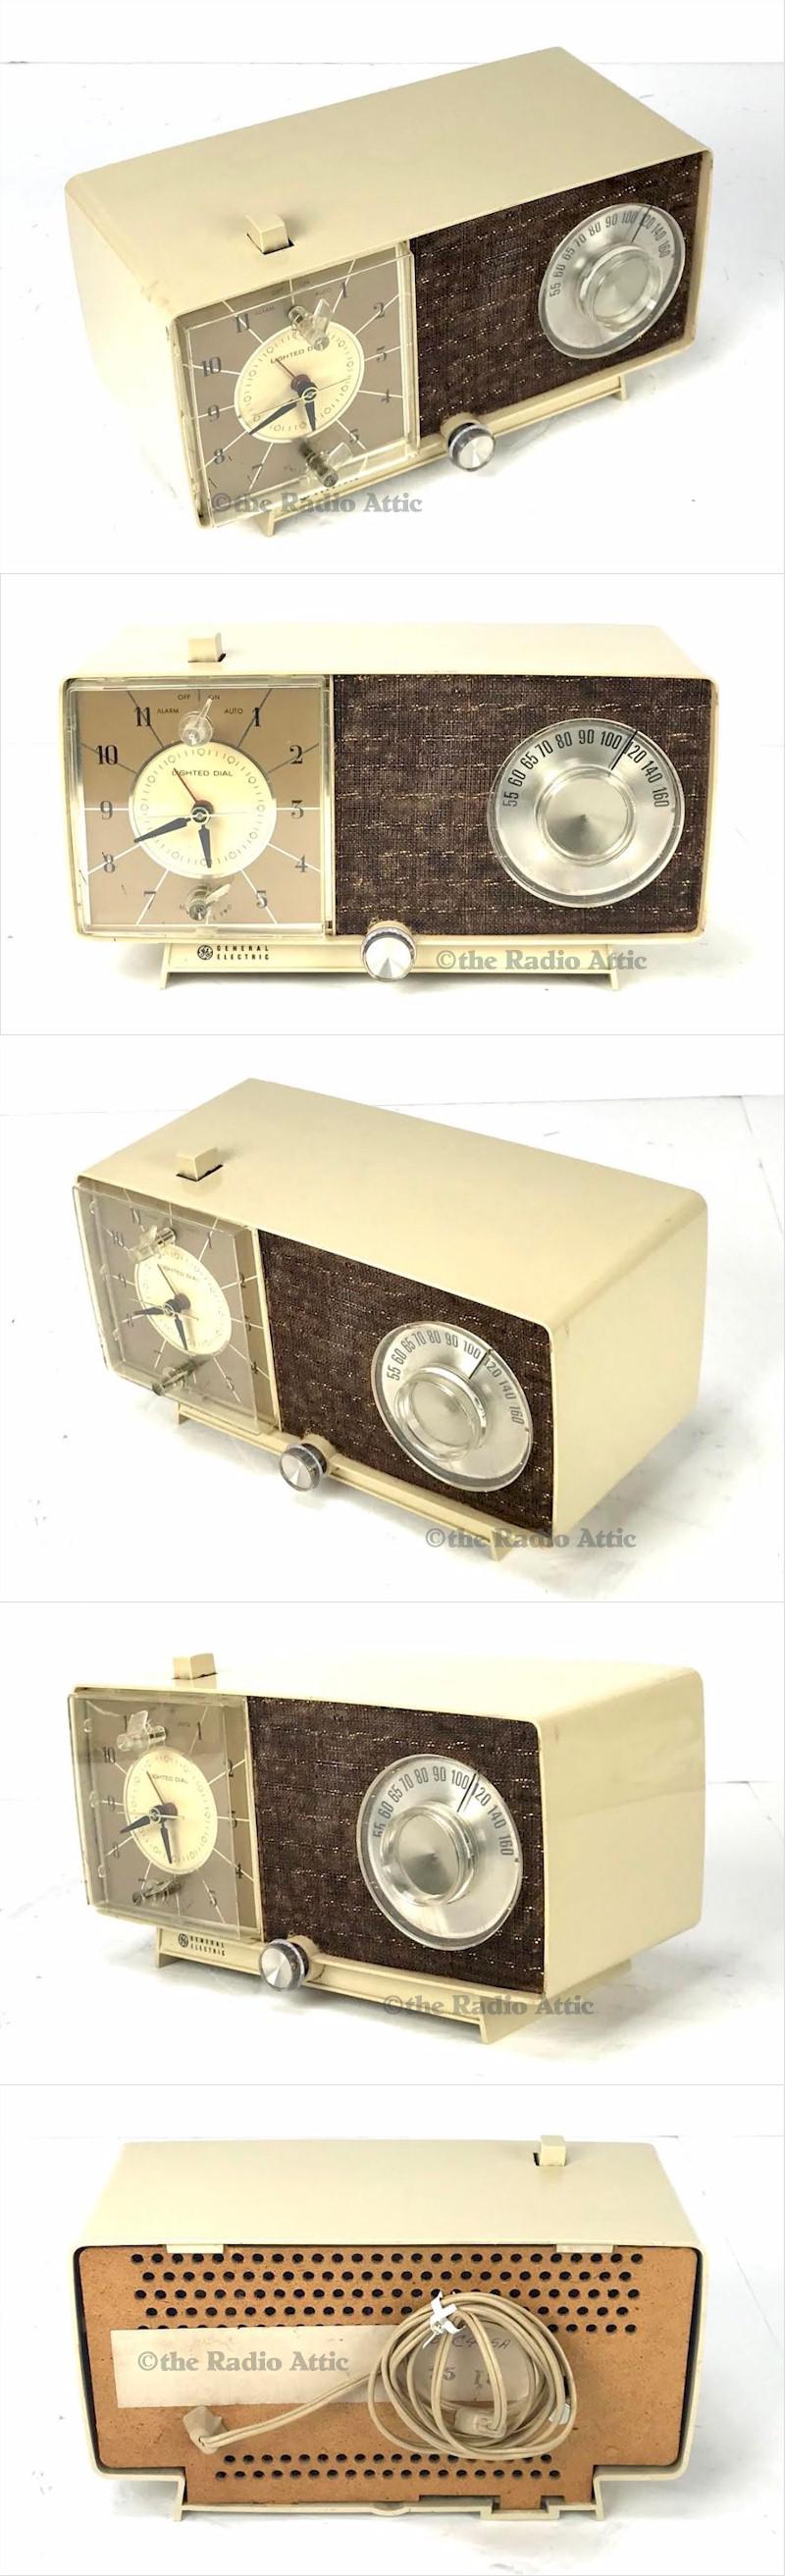 General Electric C465A Clock Radio (1962)